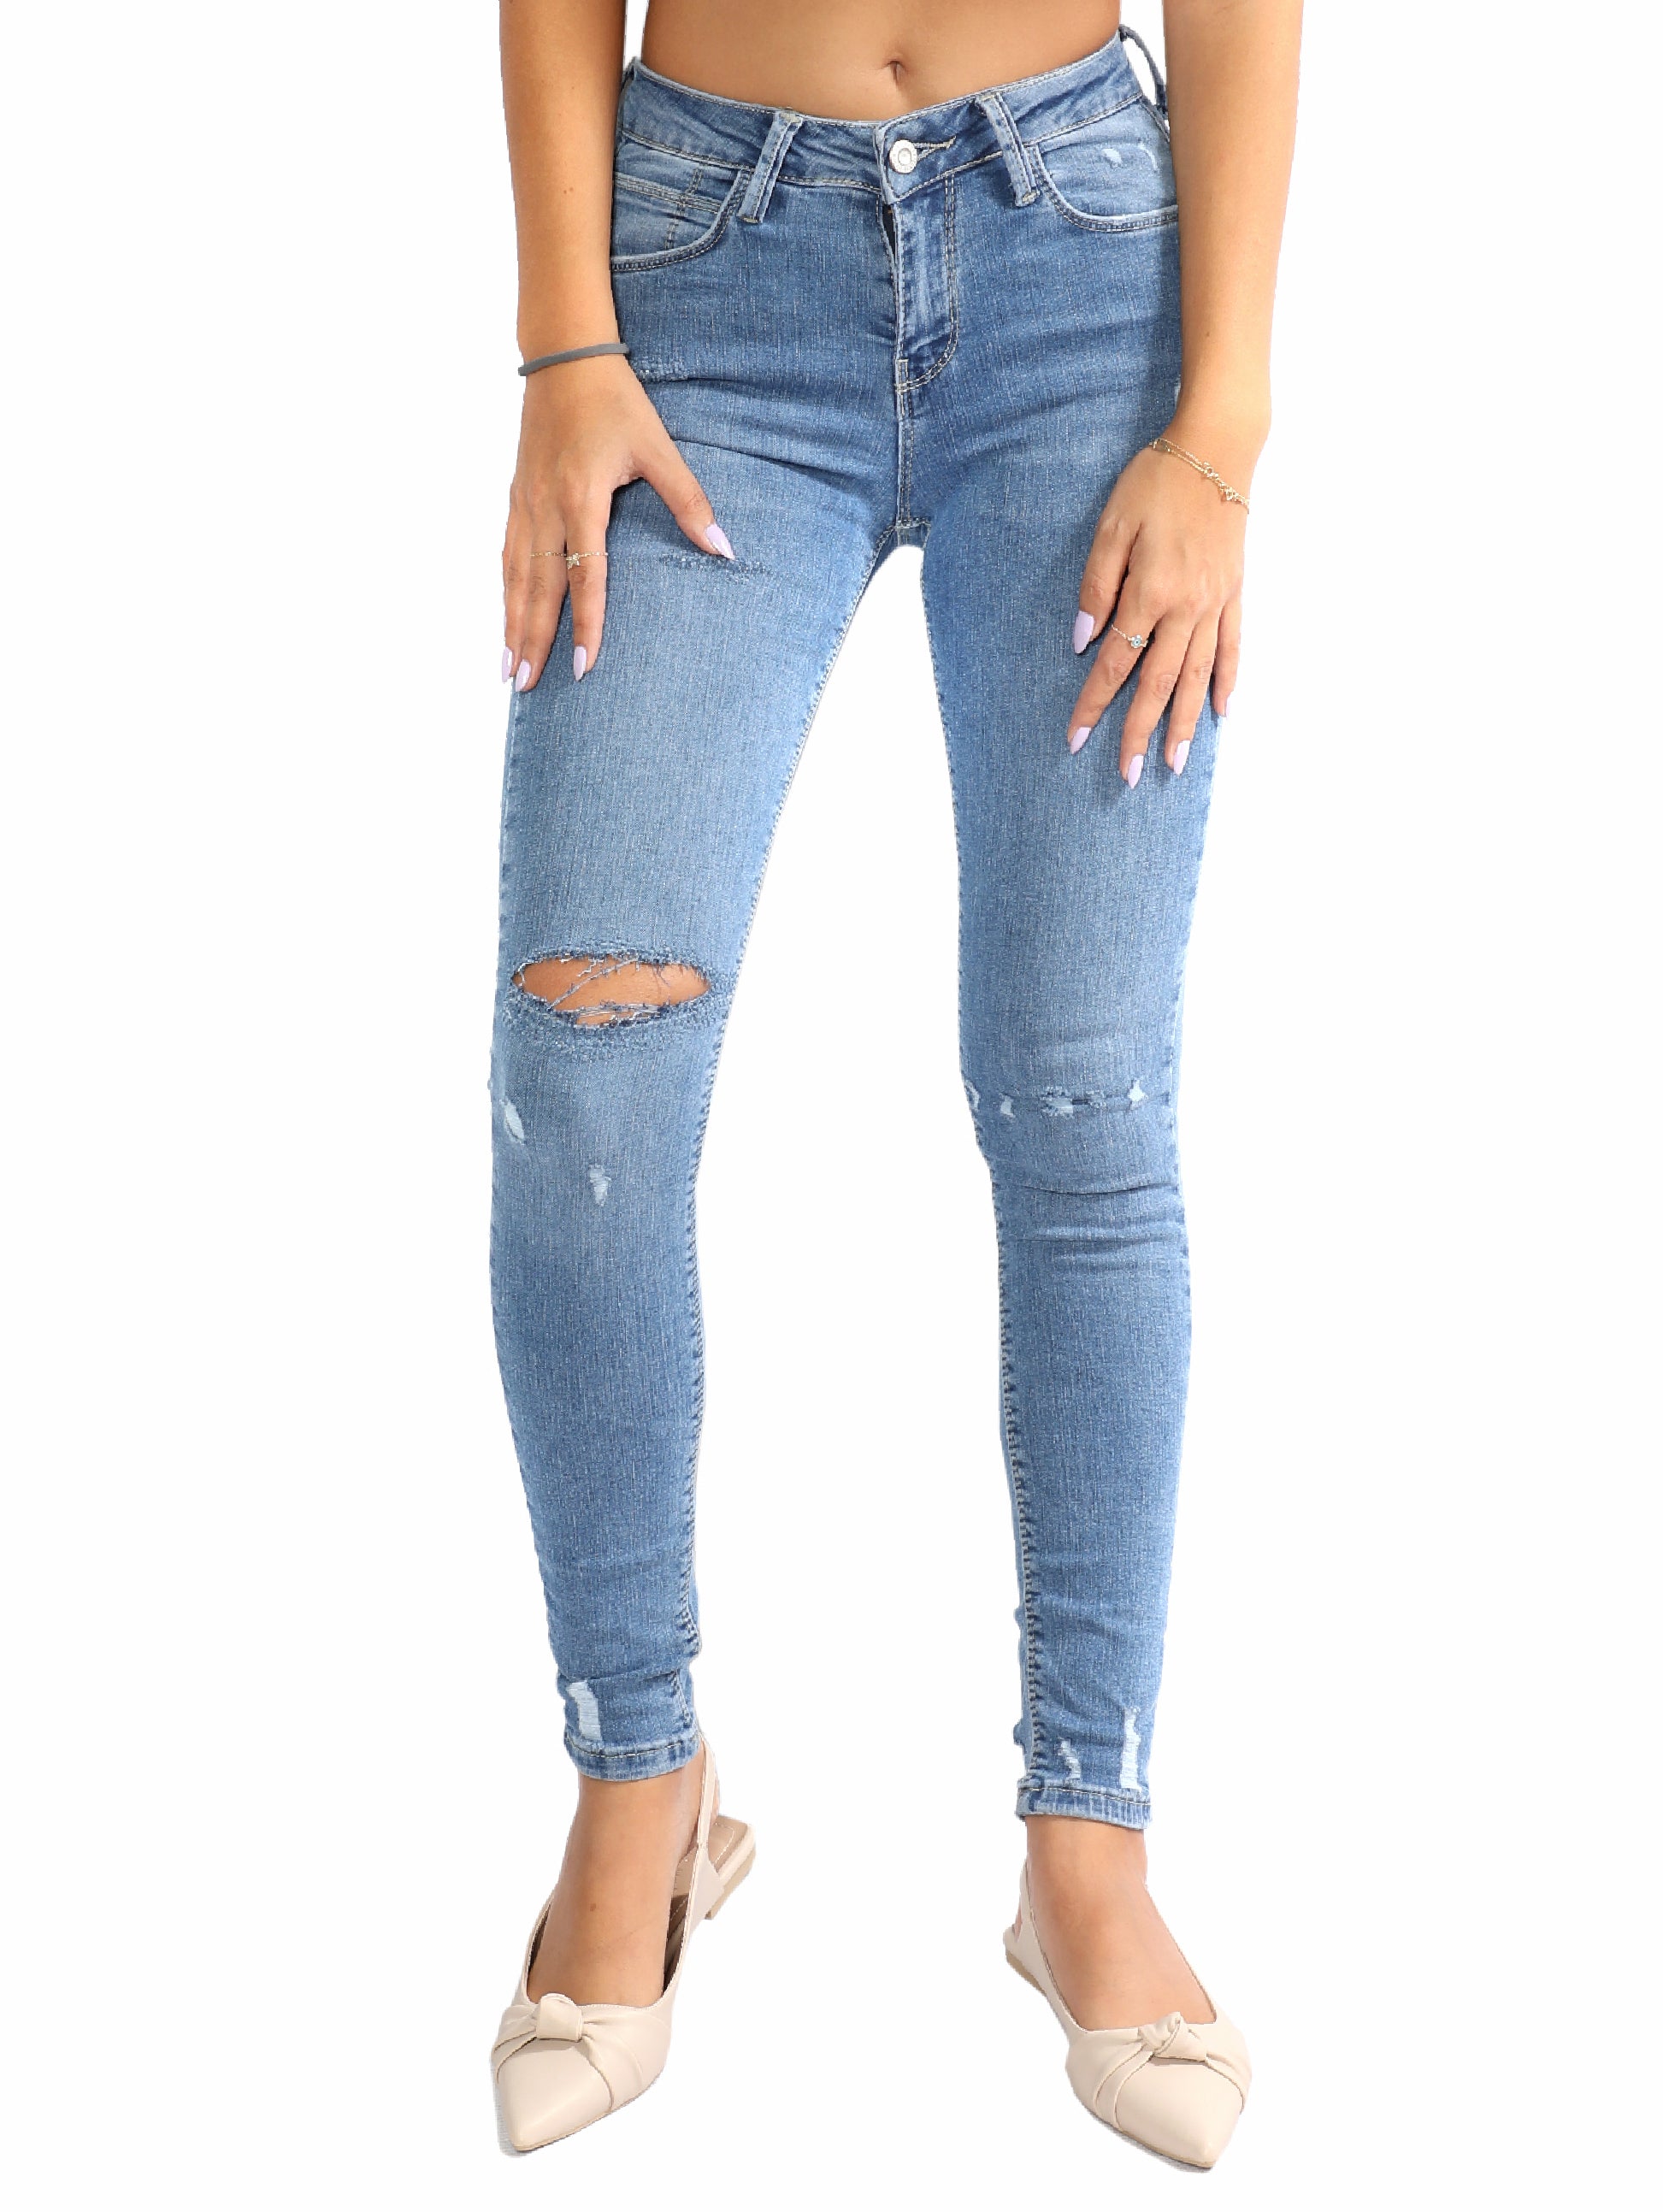 Women Denim Jeans With Unique Ripped Design